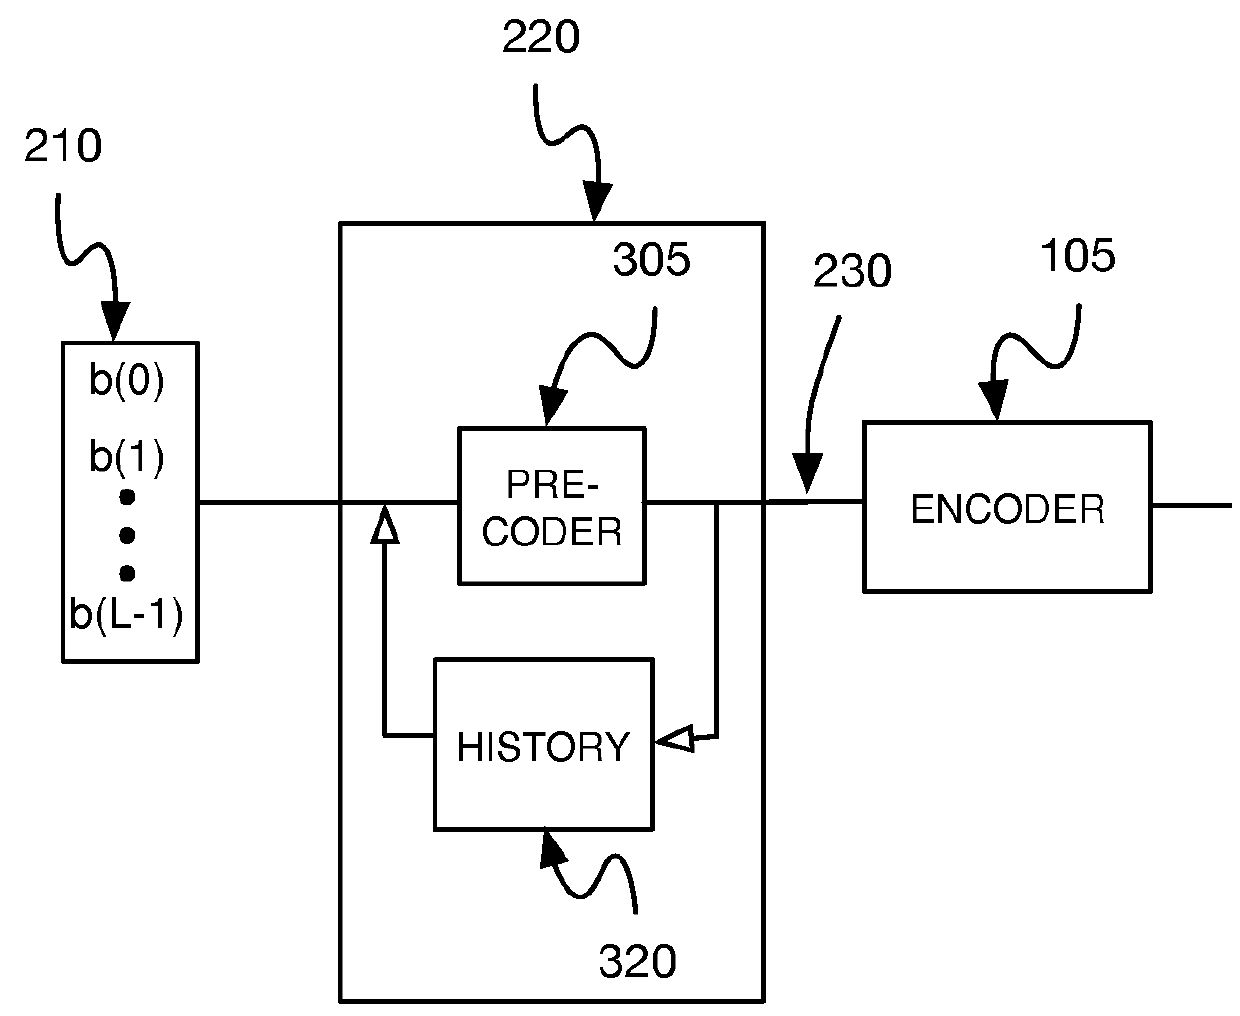 Clock-embedded vector signaling codes